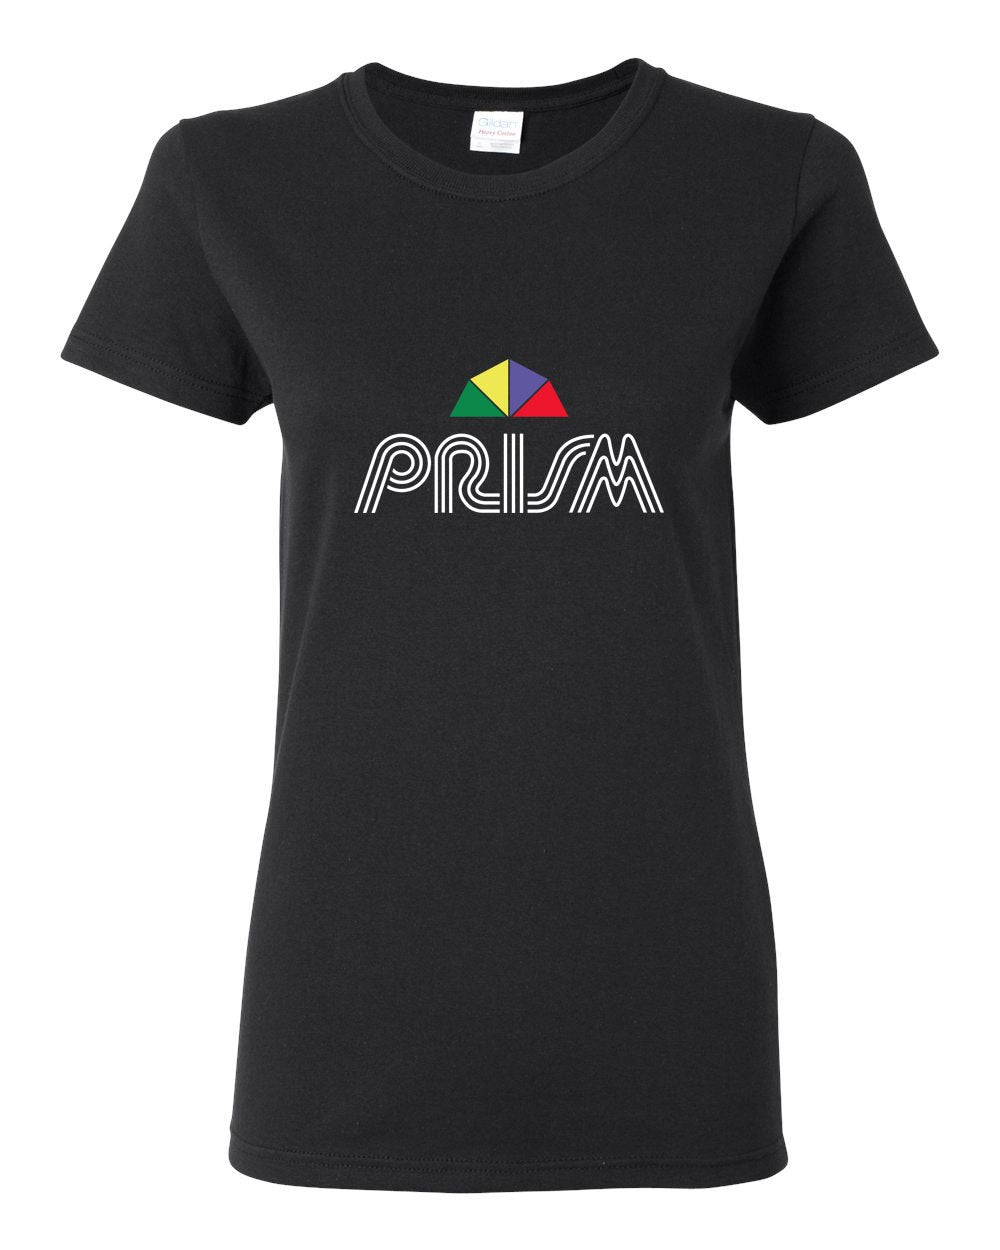 Prism LADIES Missy-Fit T-Shirt